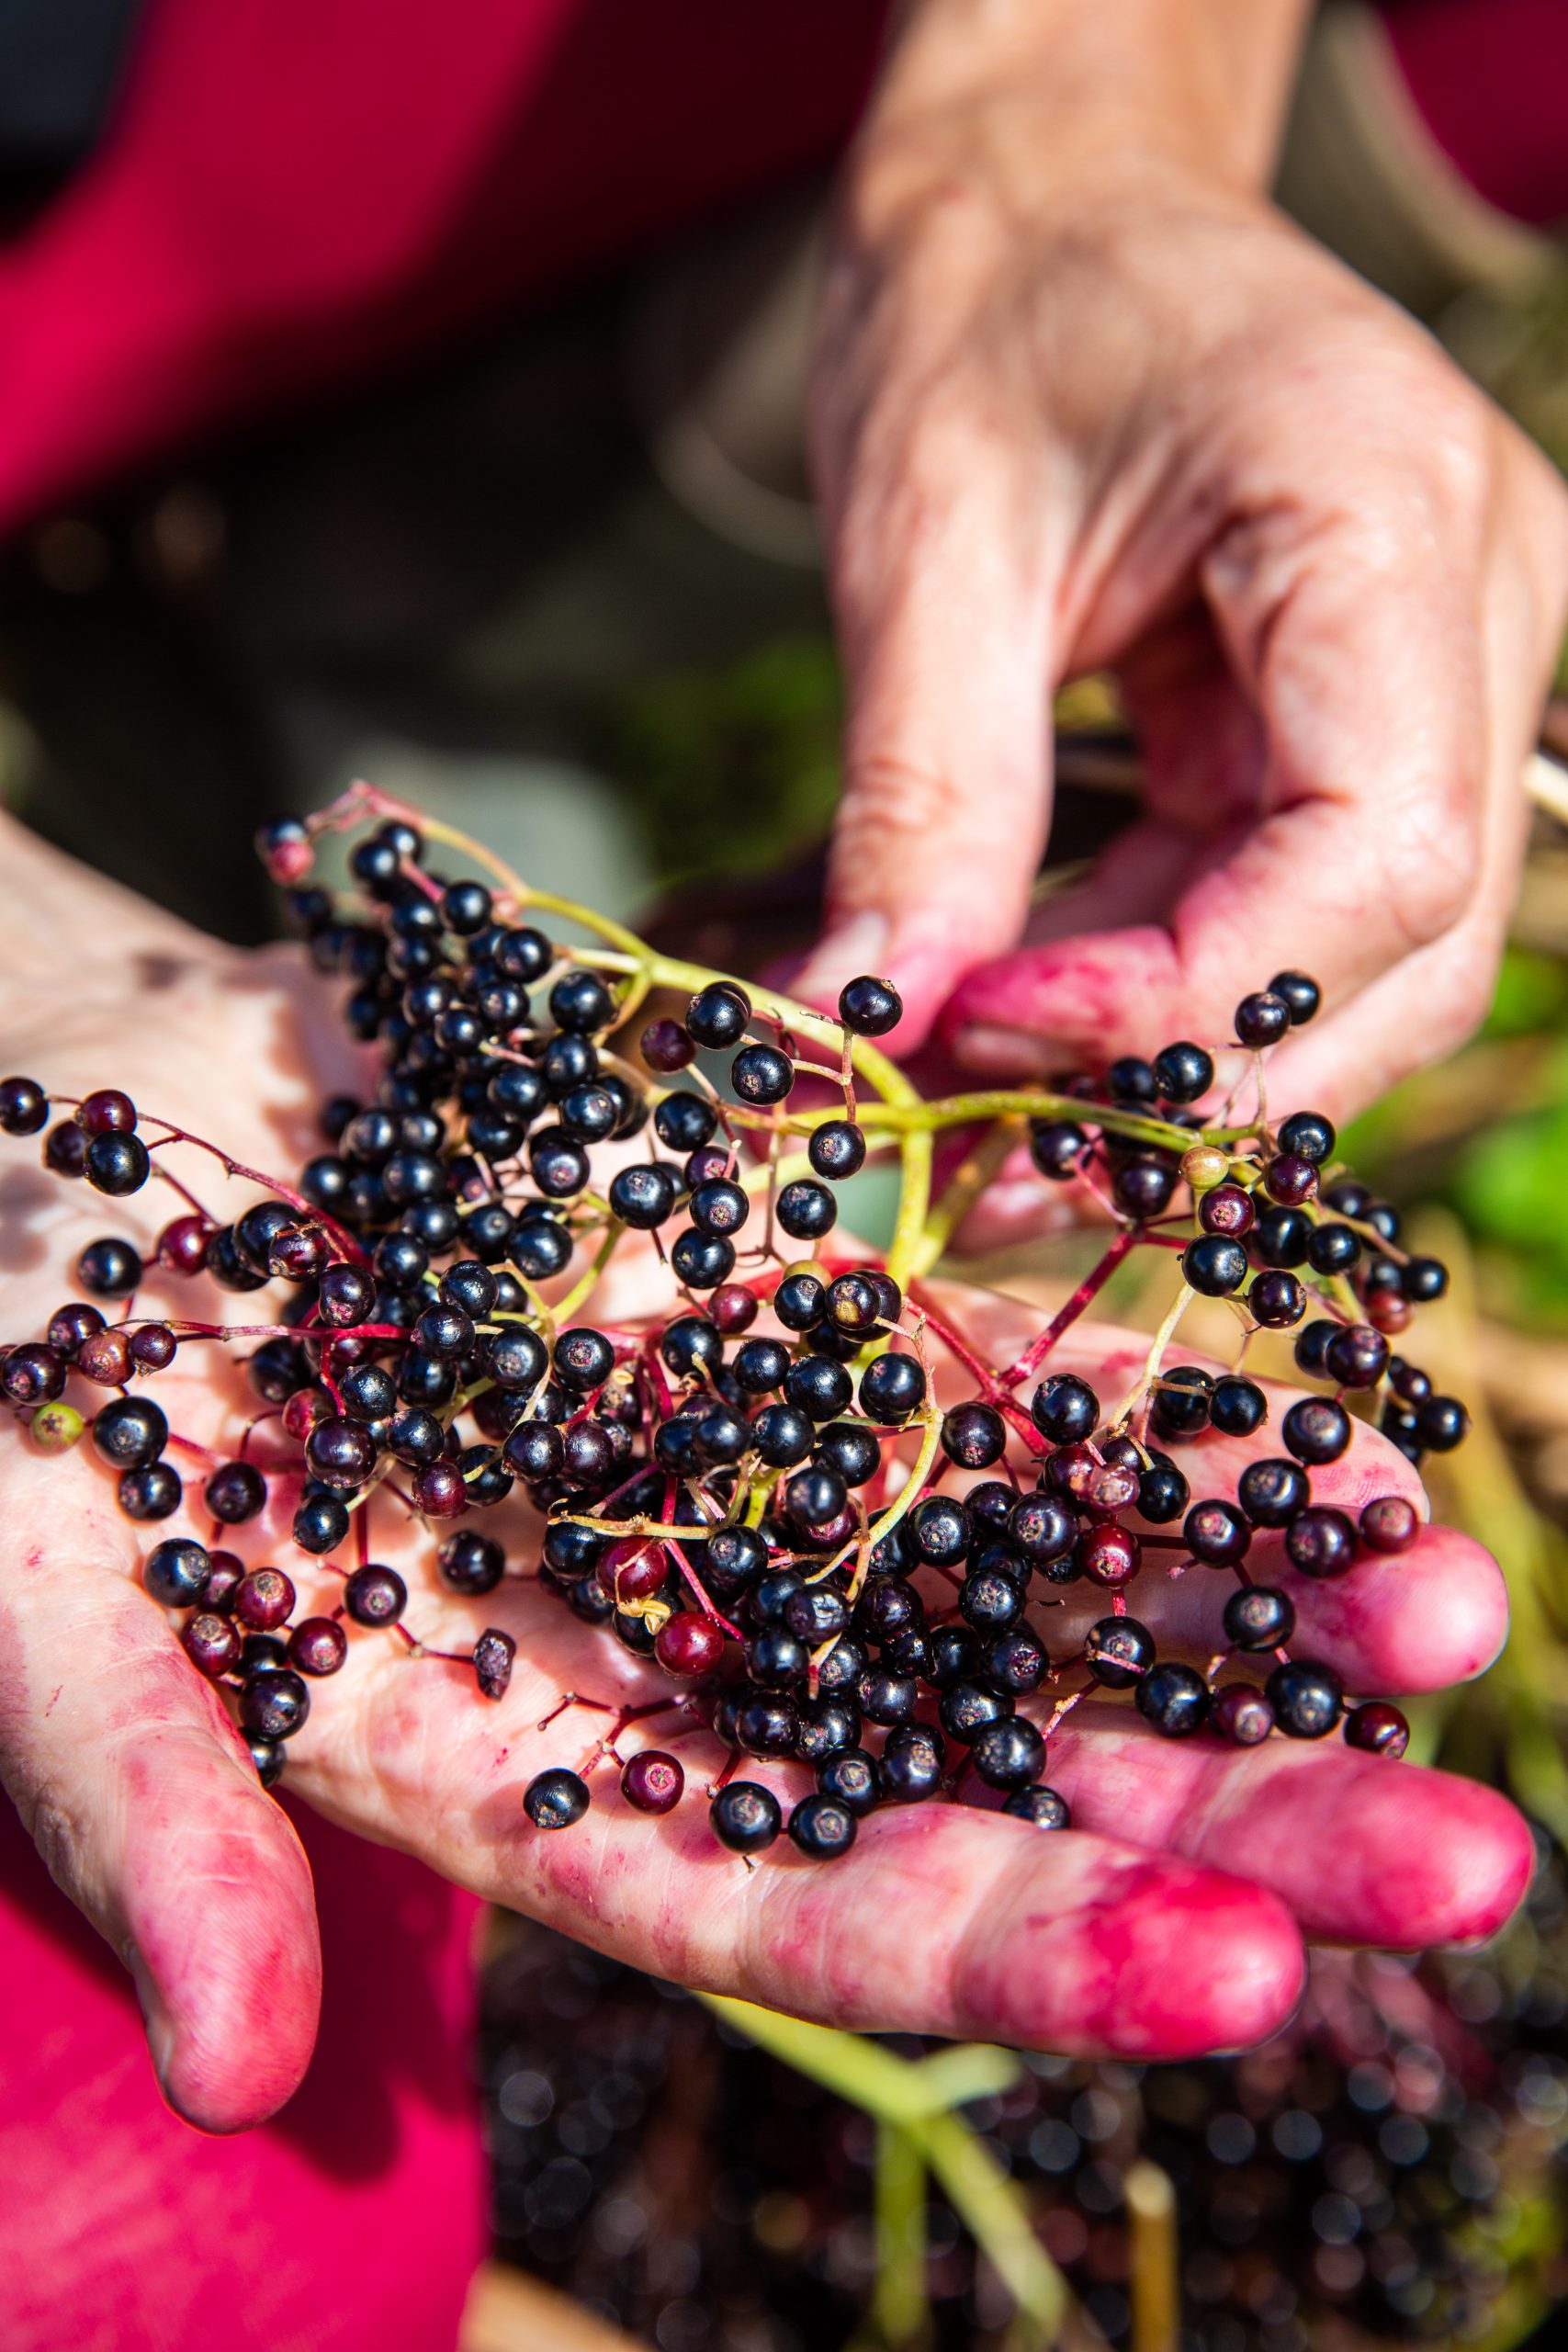 A cluster of elderberries in a hand